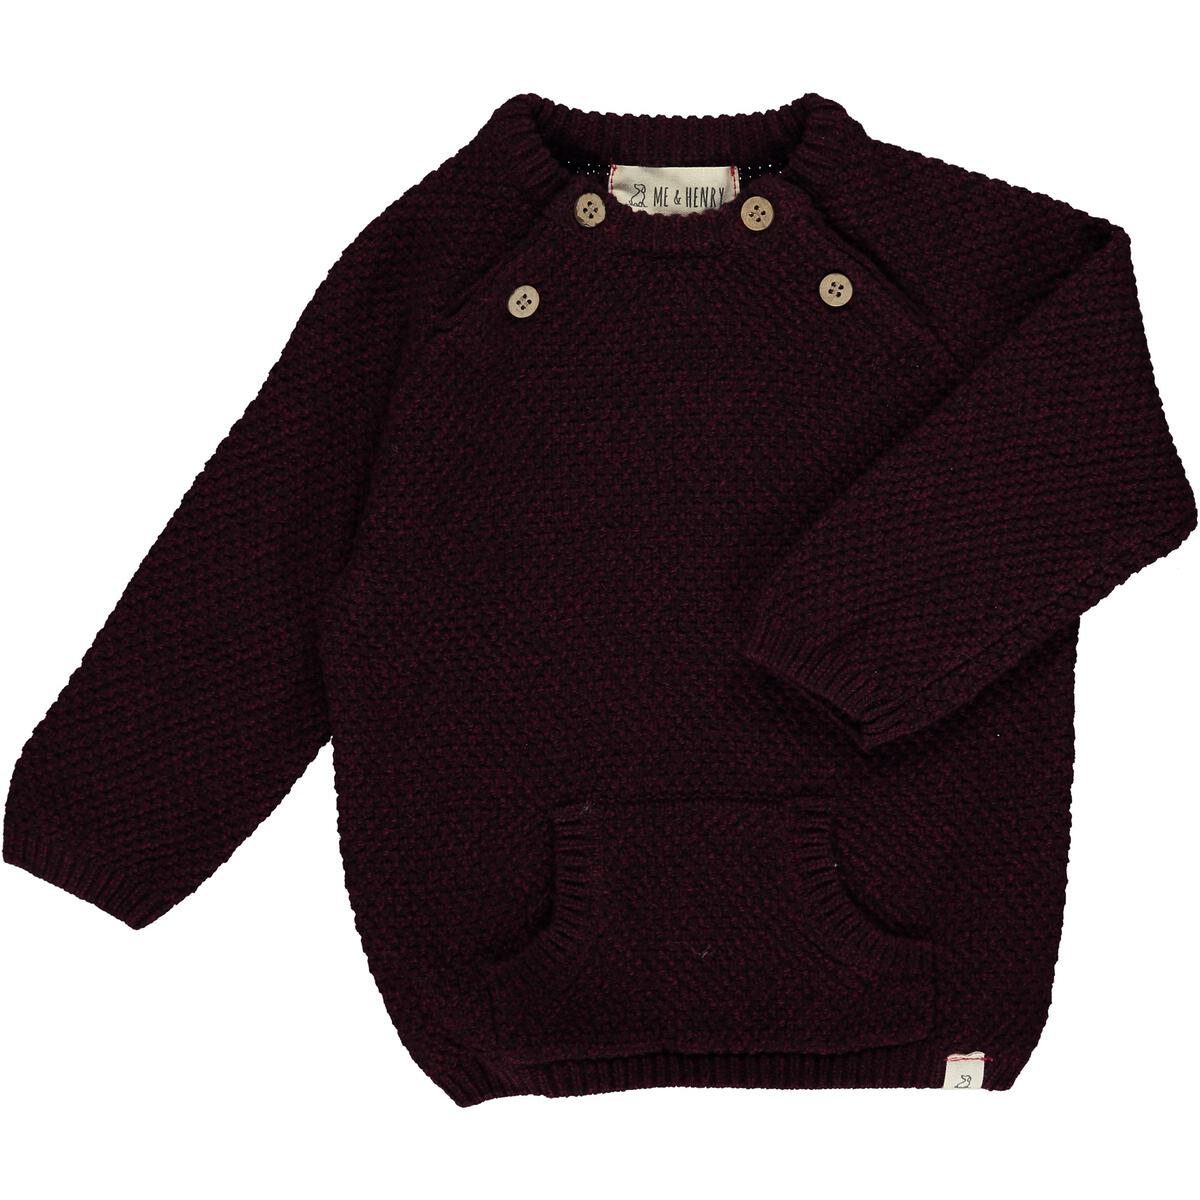 Morrison Burgundy Sweater-Infant